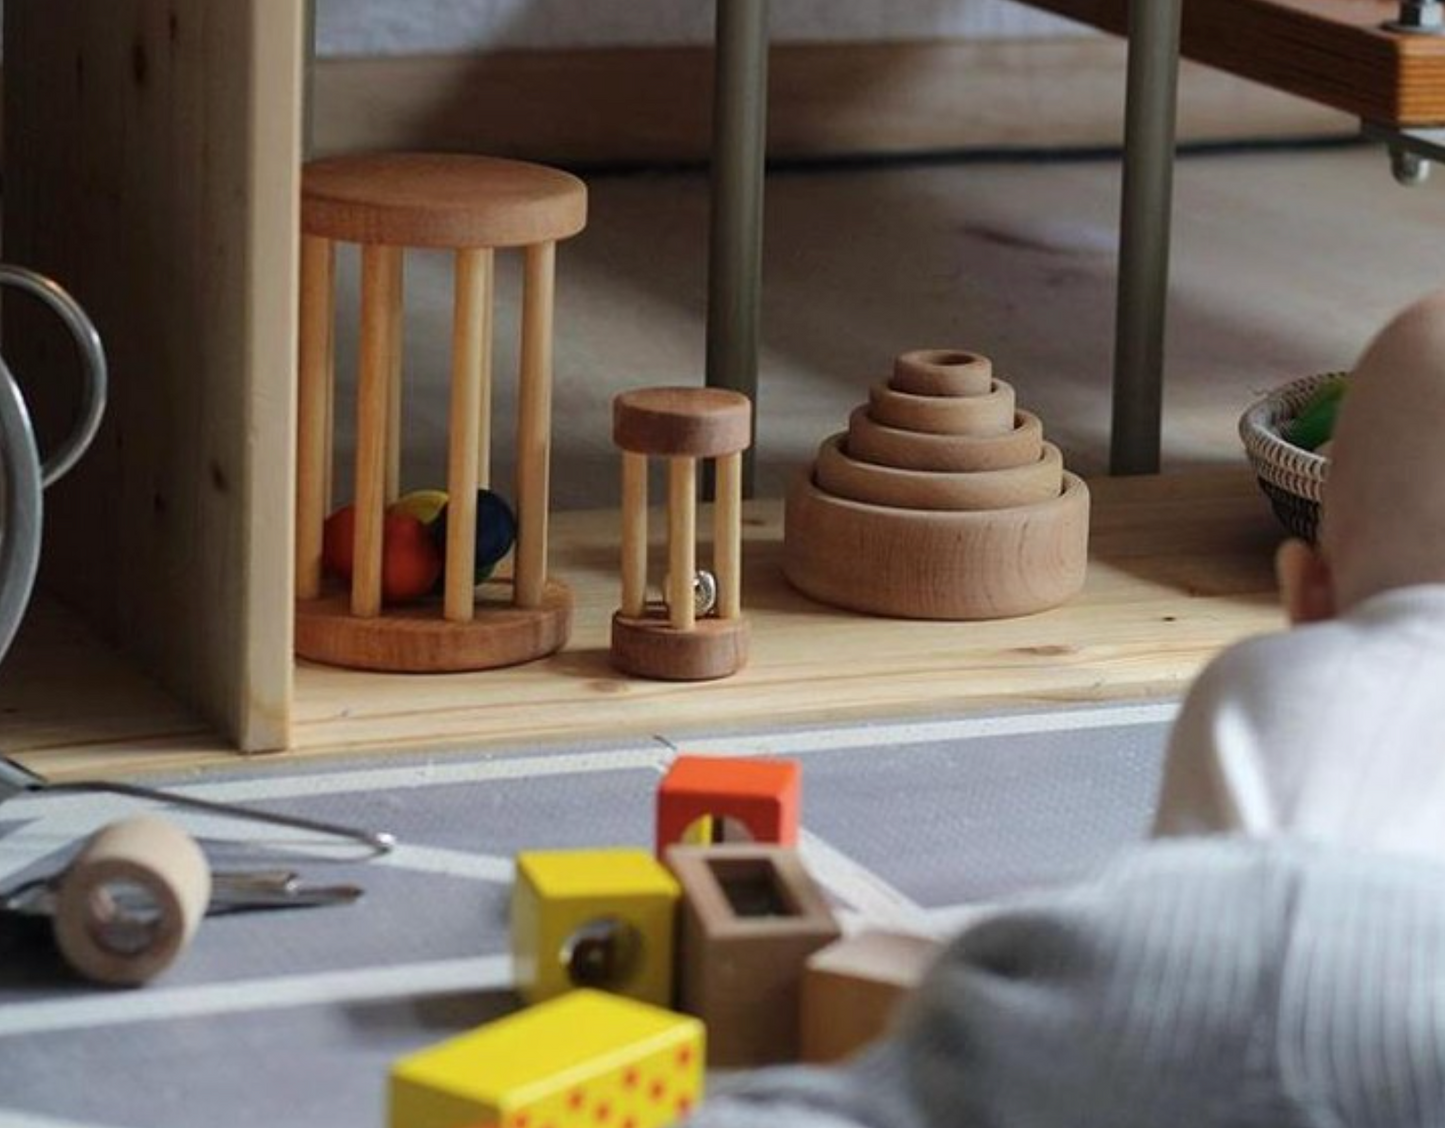 Manine Montessori Baby Set of 6 Toys